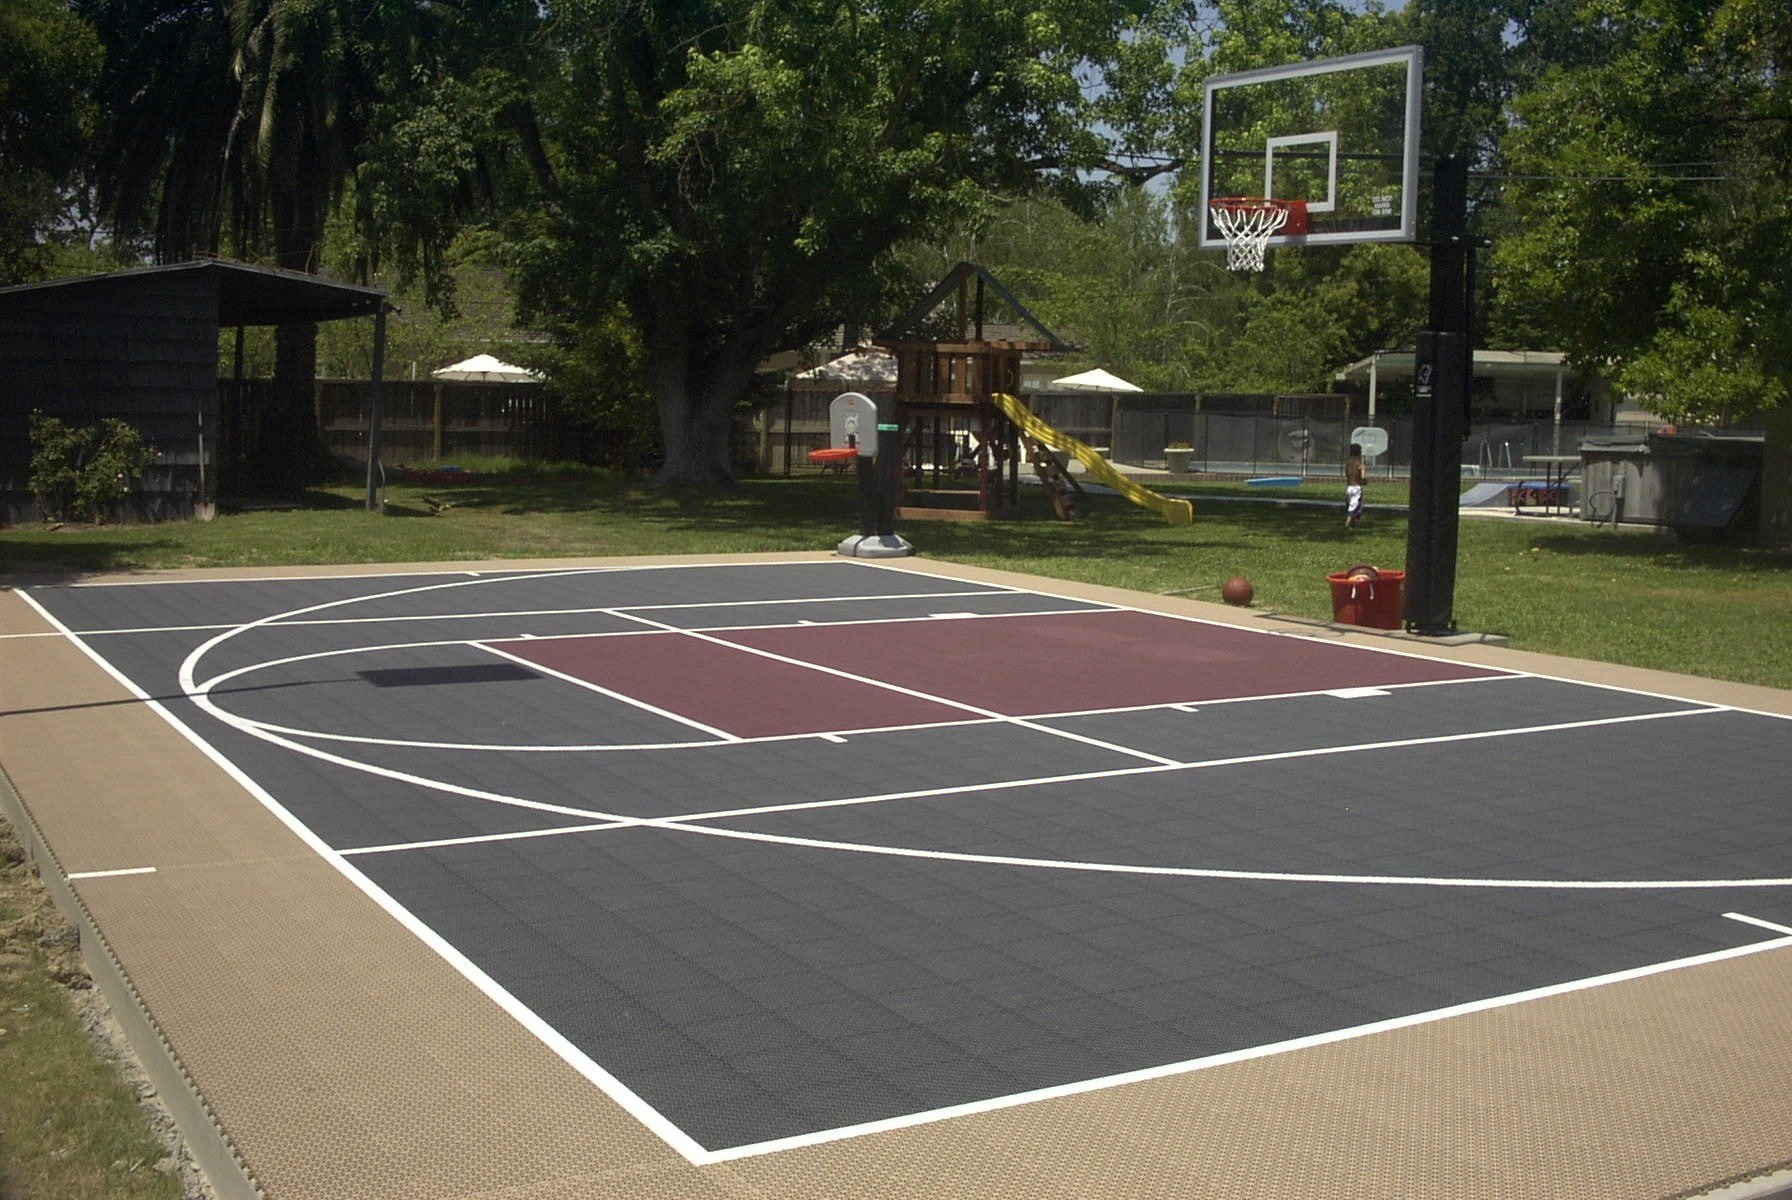 24.SIMPHOME.COM backyard basketball court 1000 43 ideas about backyard basketball